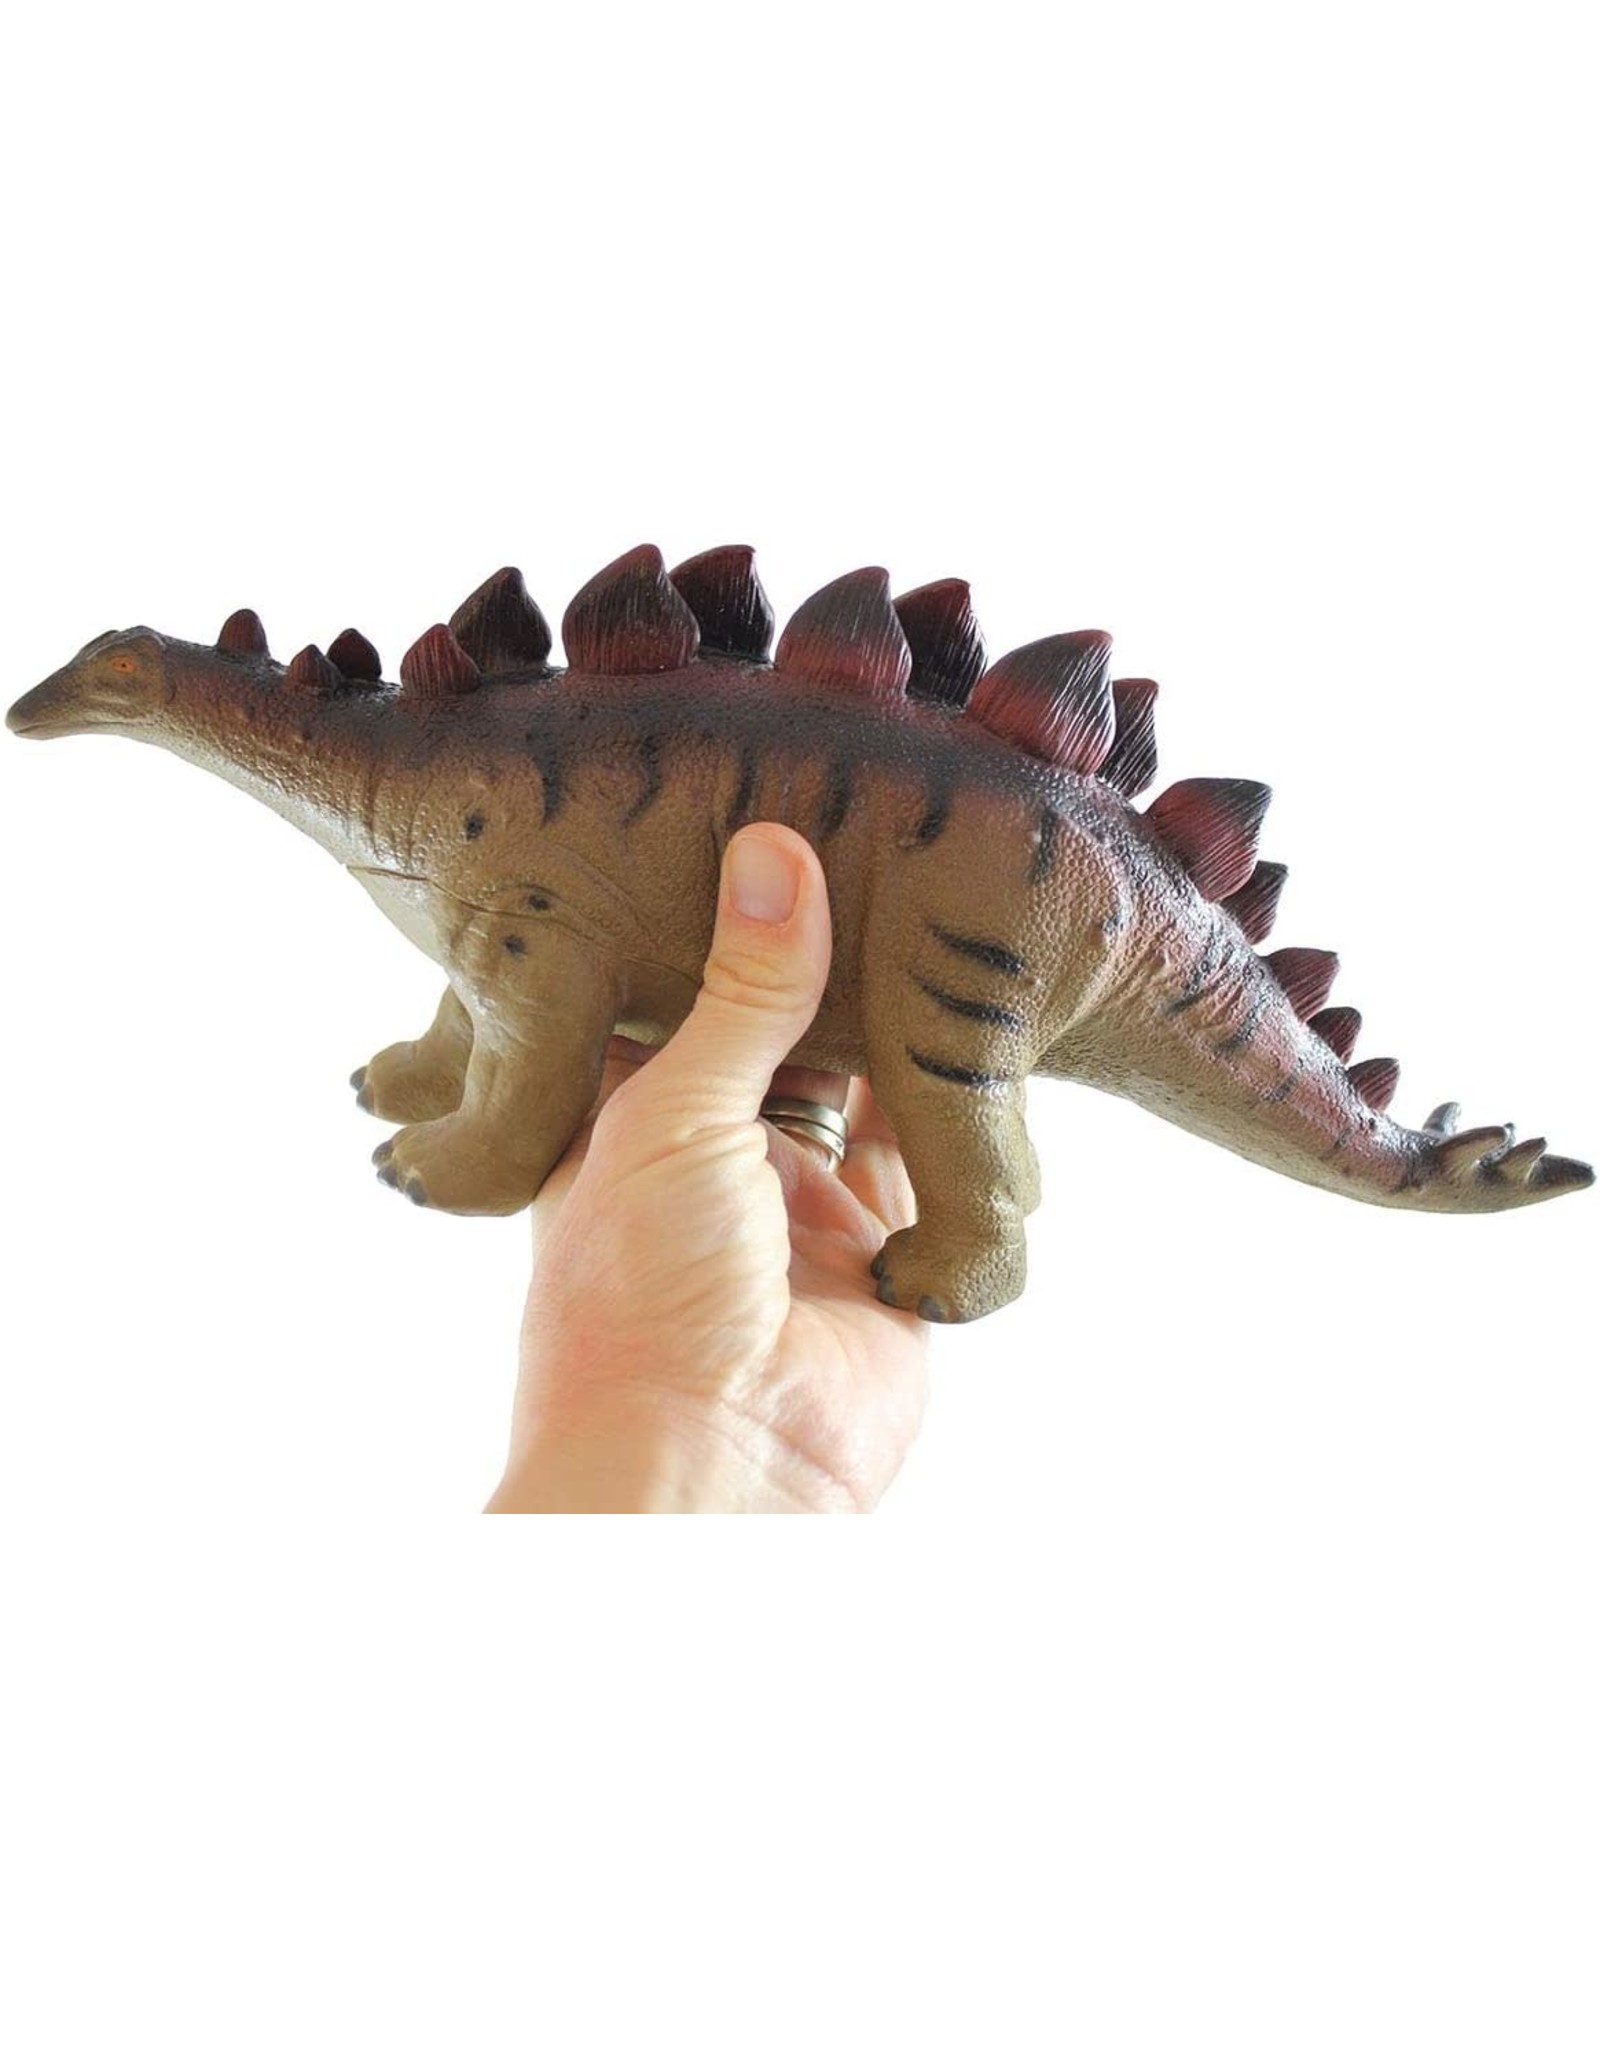 12" Soft Stegosaurus